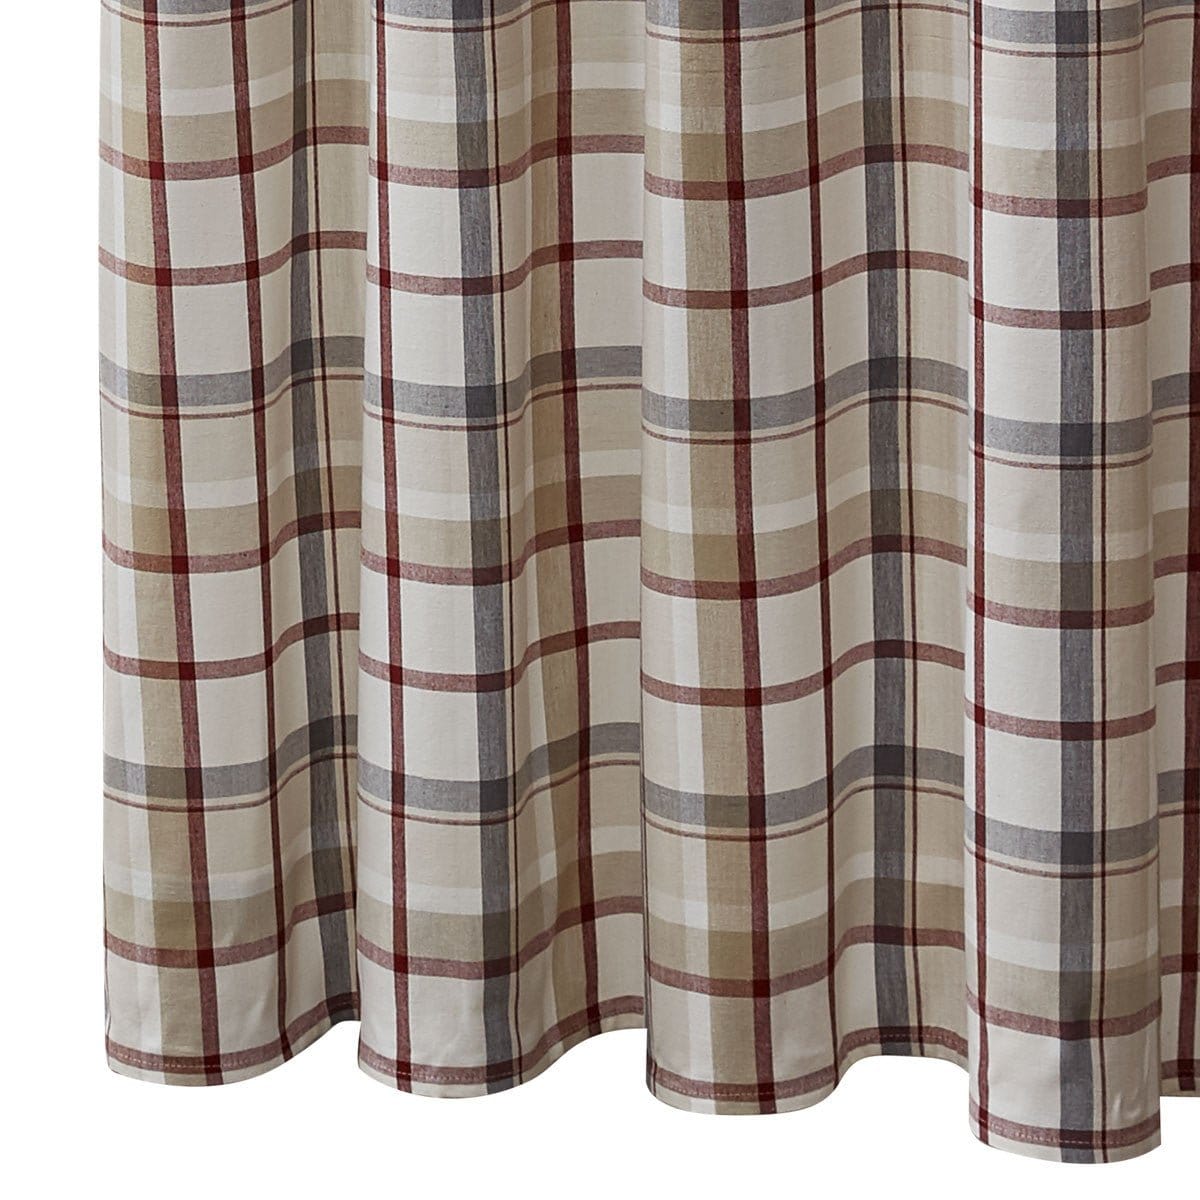 Glenwood Shower Curtain-Park Designs-The Village Merchant